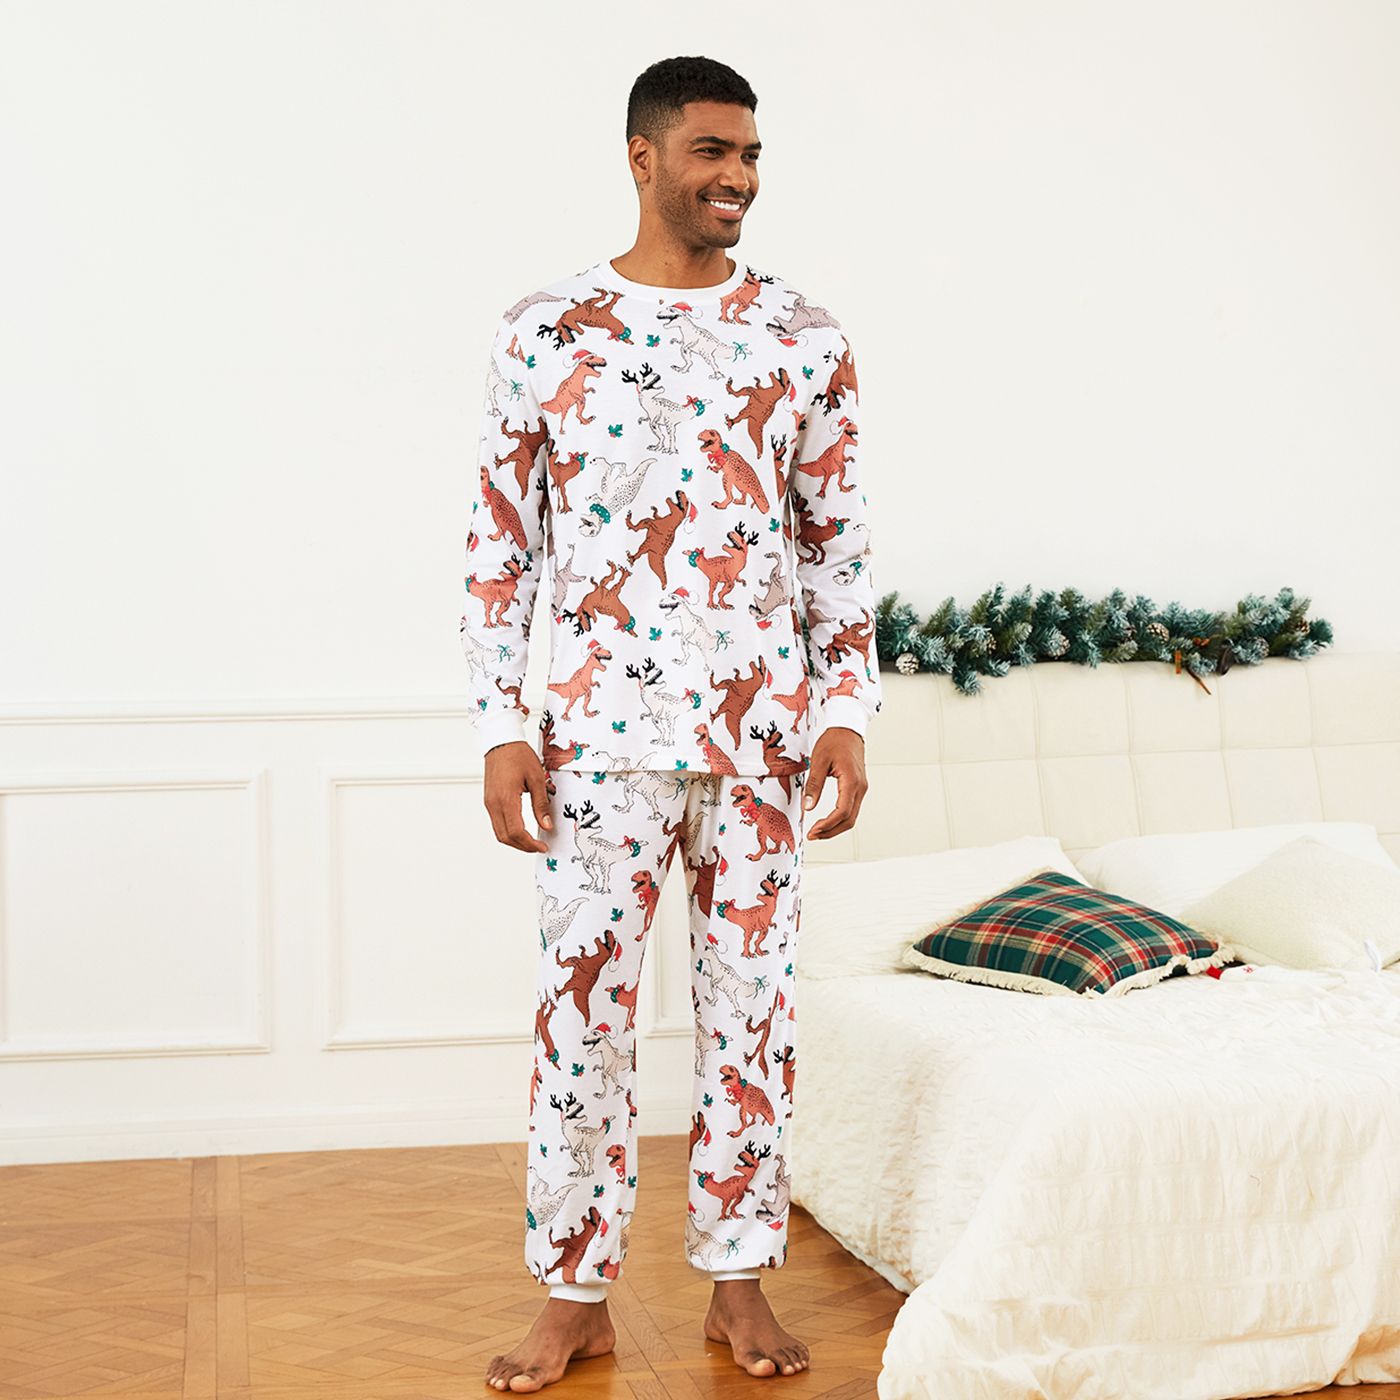 Christmas Dinosuar Print Family Matching Pajamas Sets (Flame Resistant)